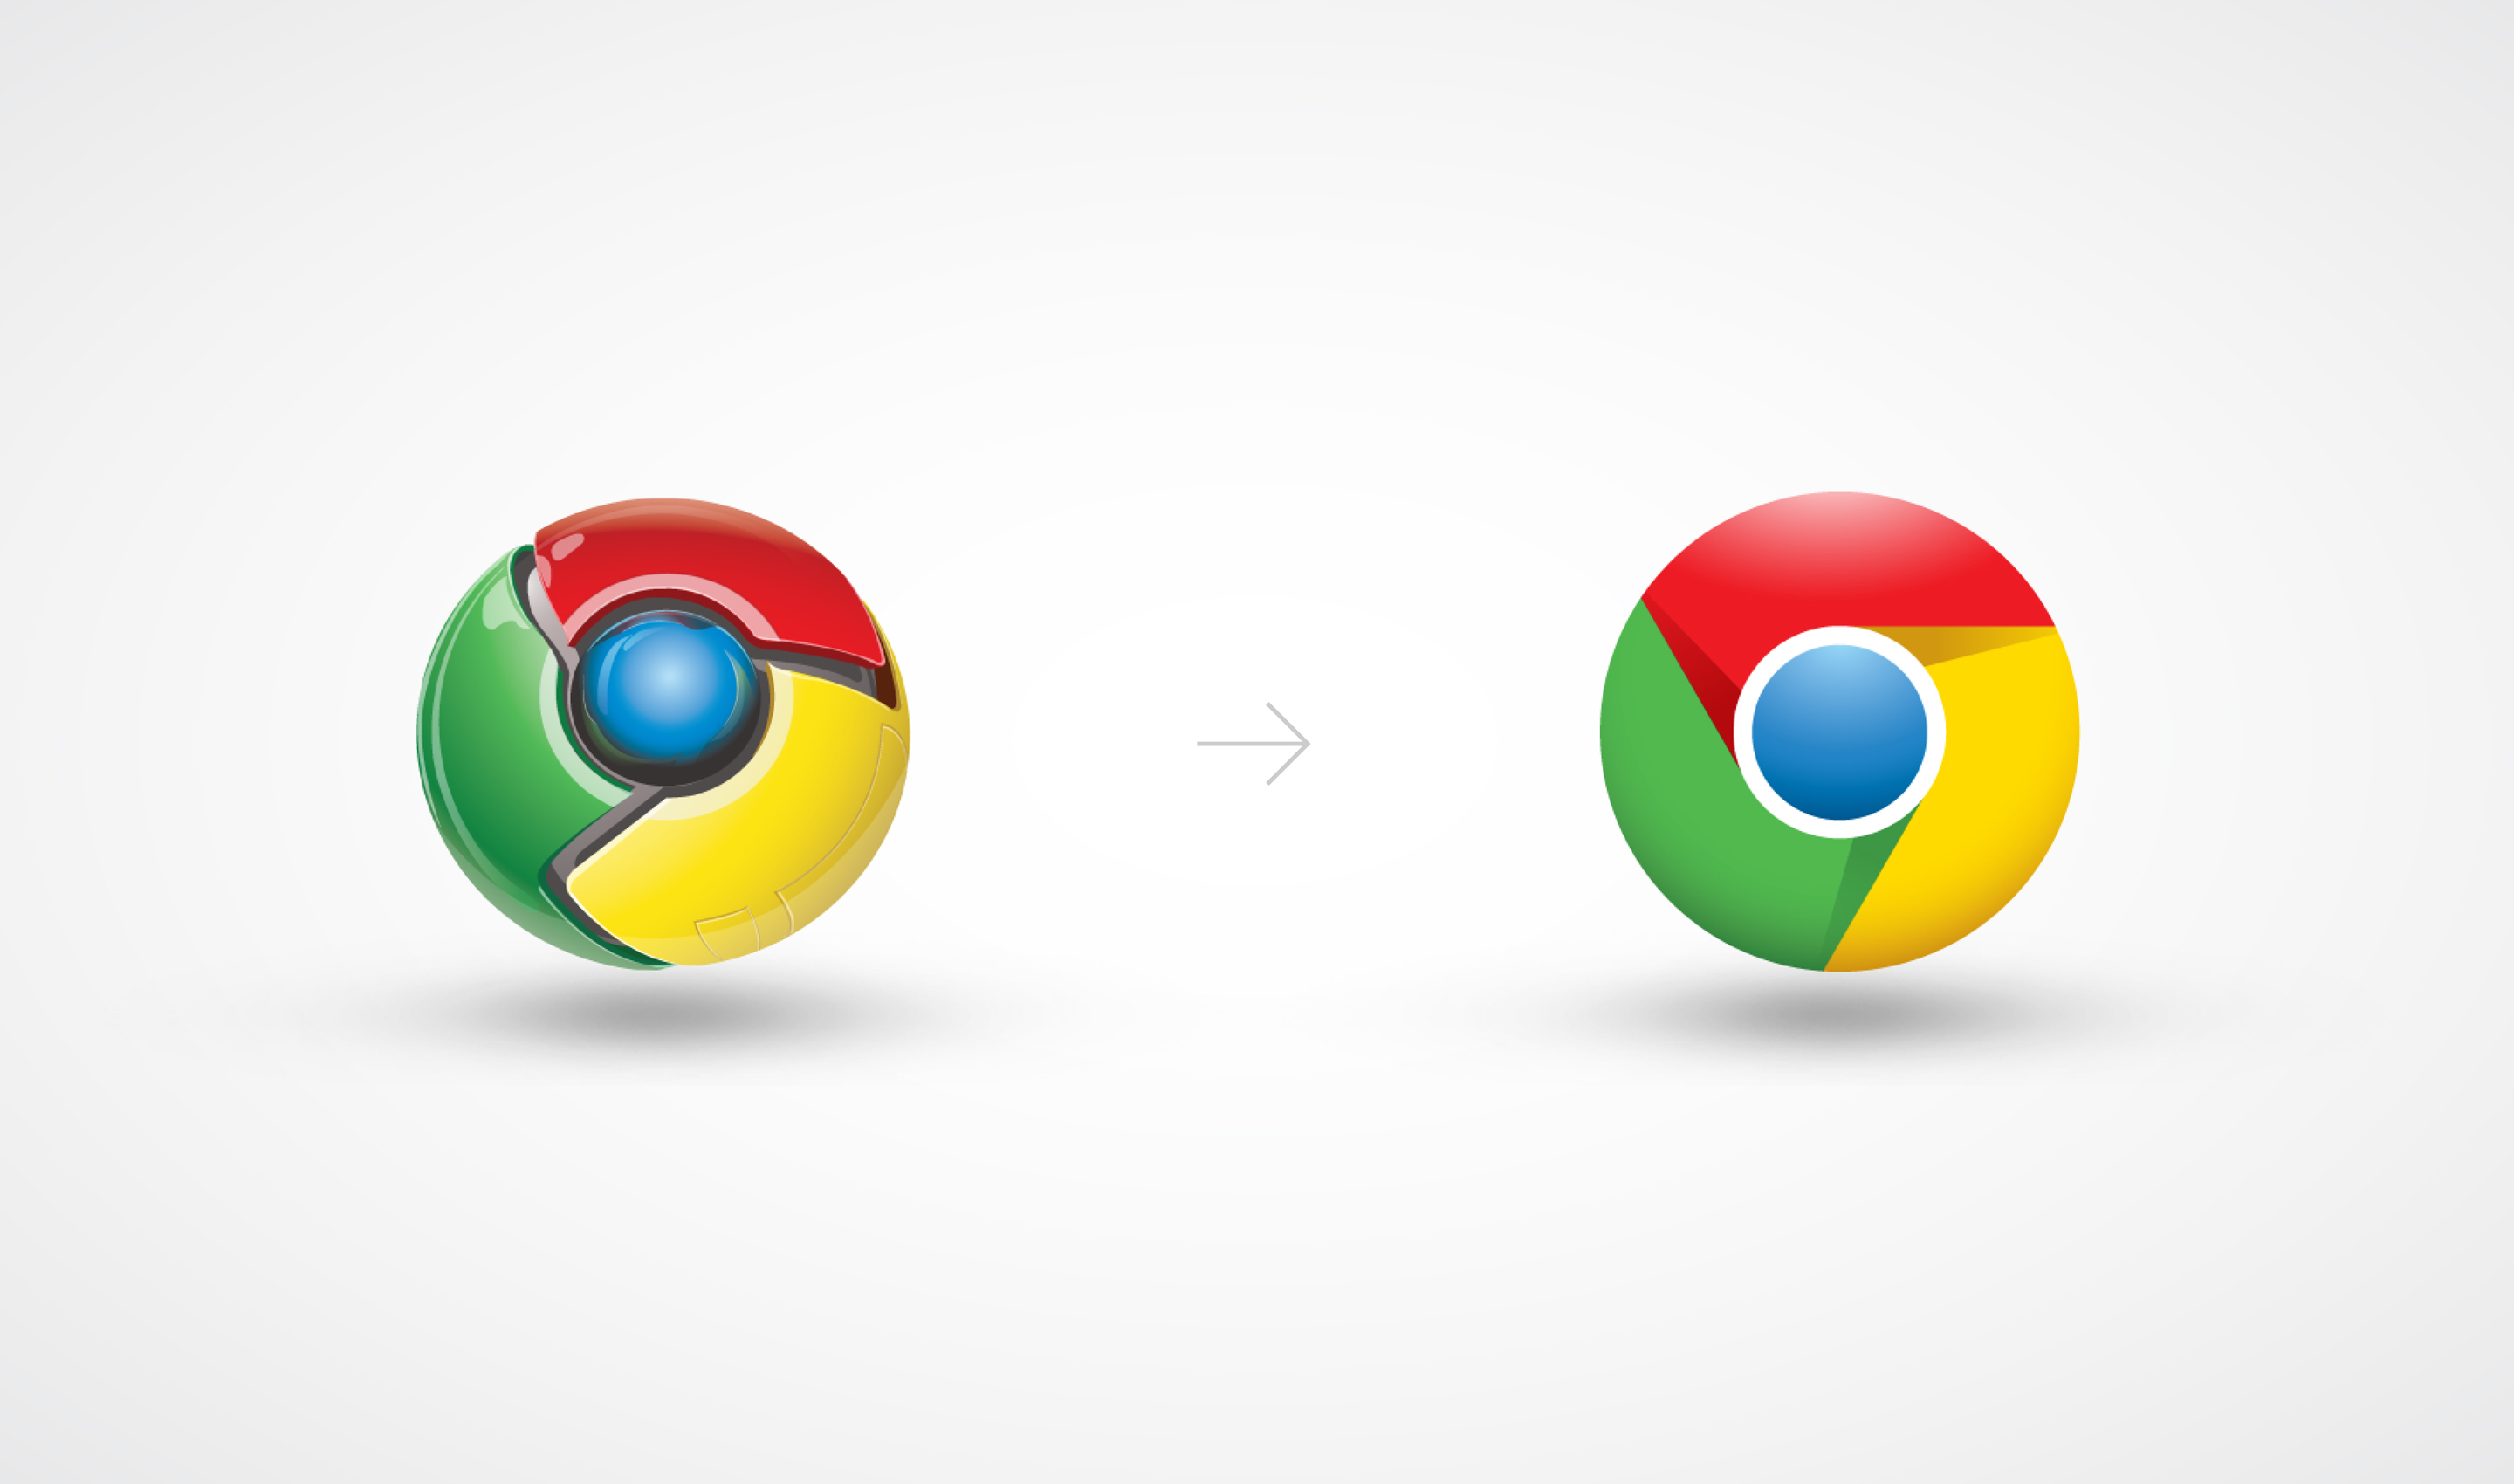 New logo for Google Chrome designed by Office